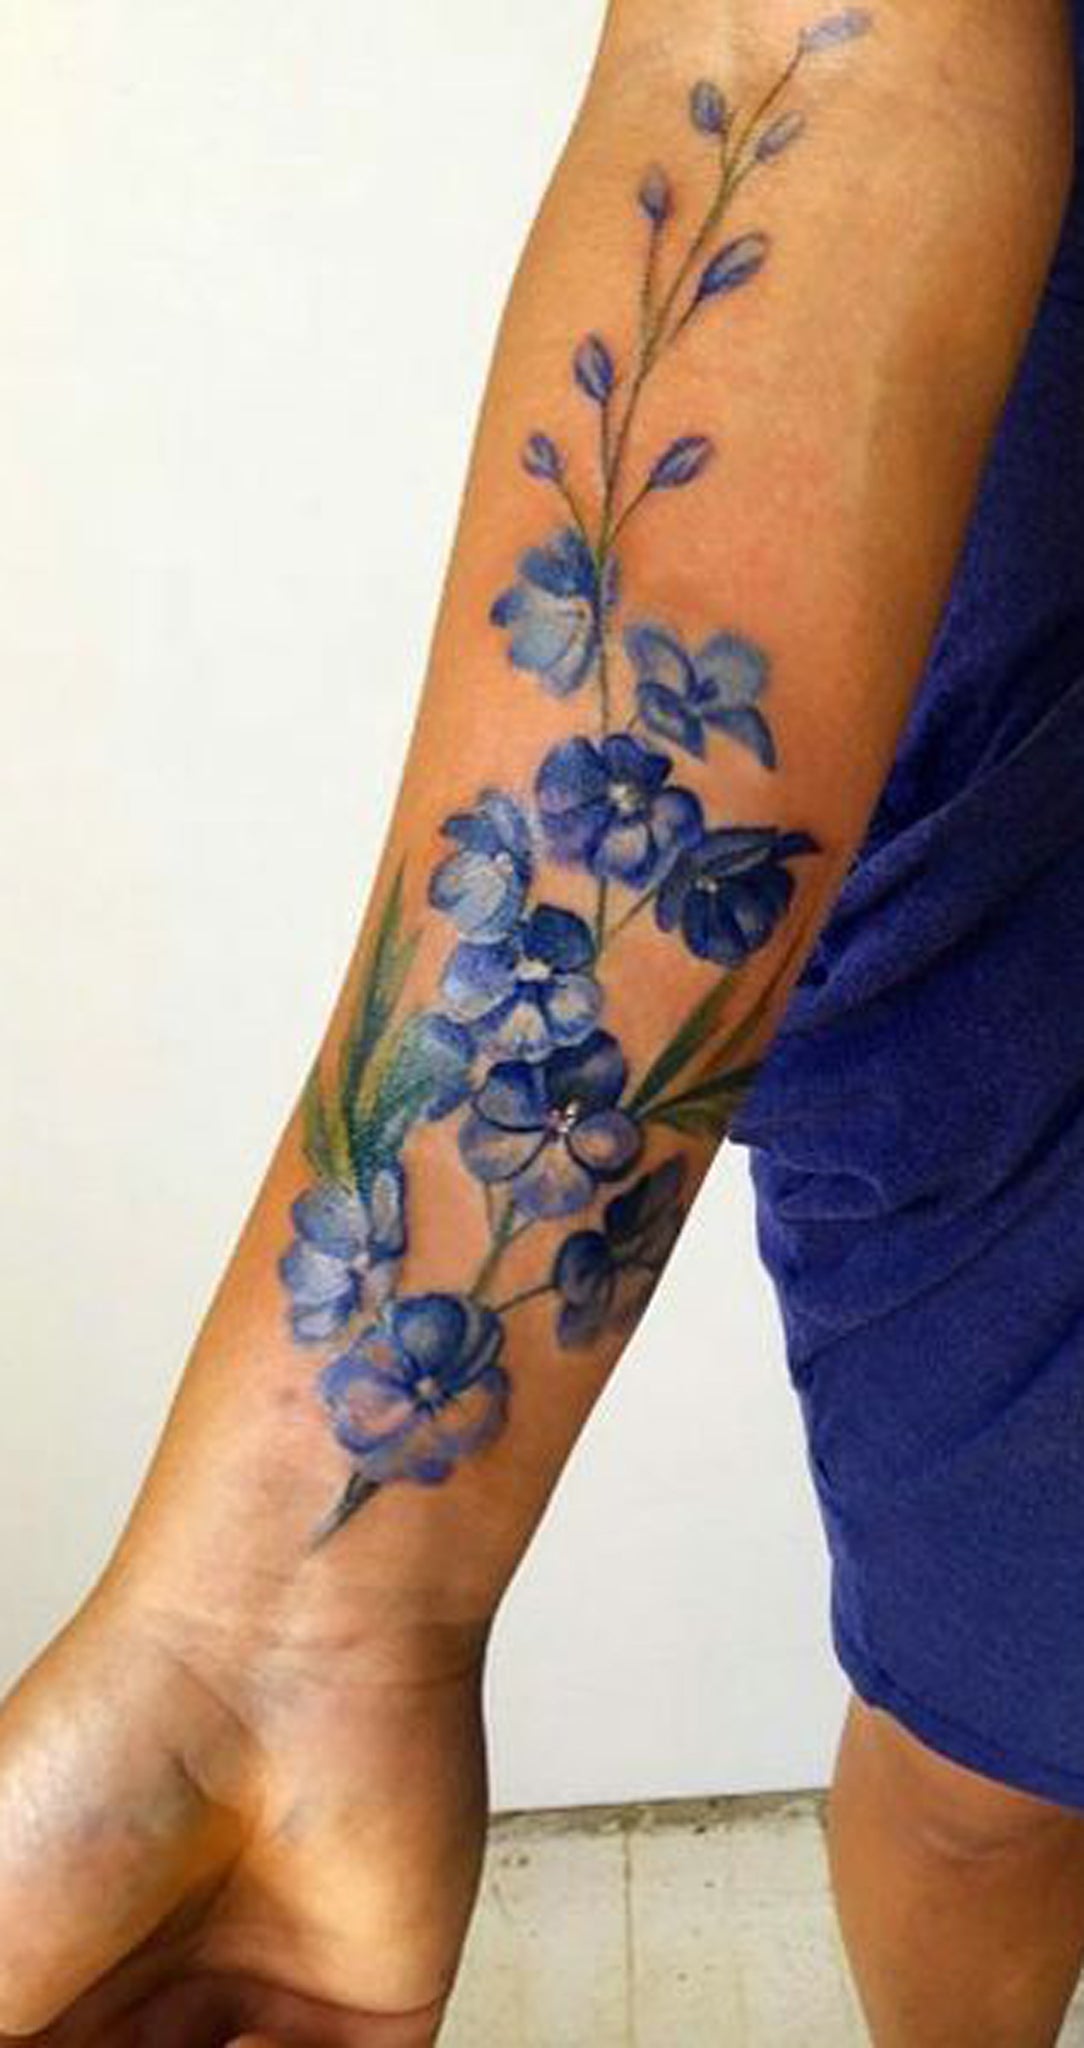 Watercolor Flower Forearm Tattoo Ideas for Women -  ideas de tatuaje de antebrazo acuarela flor - www.MyBodiArt.com